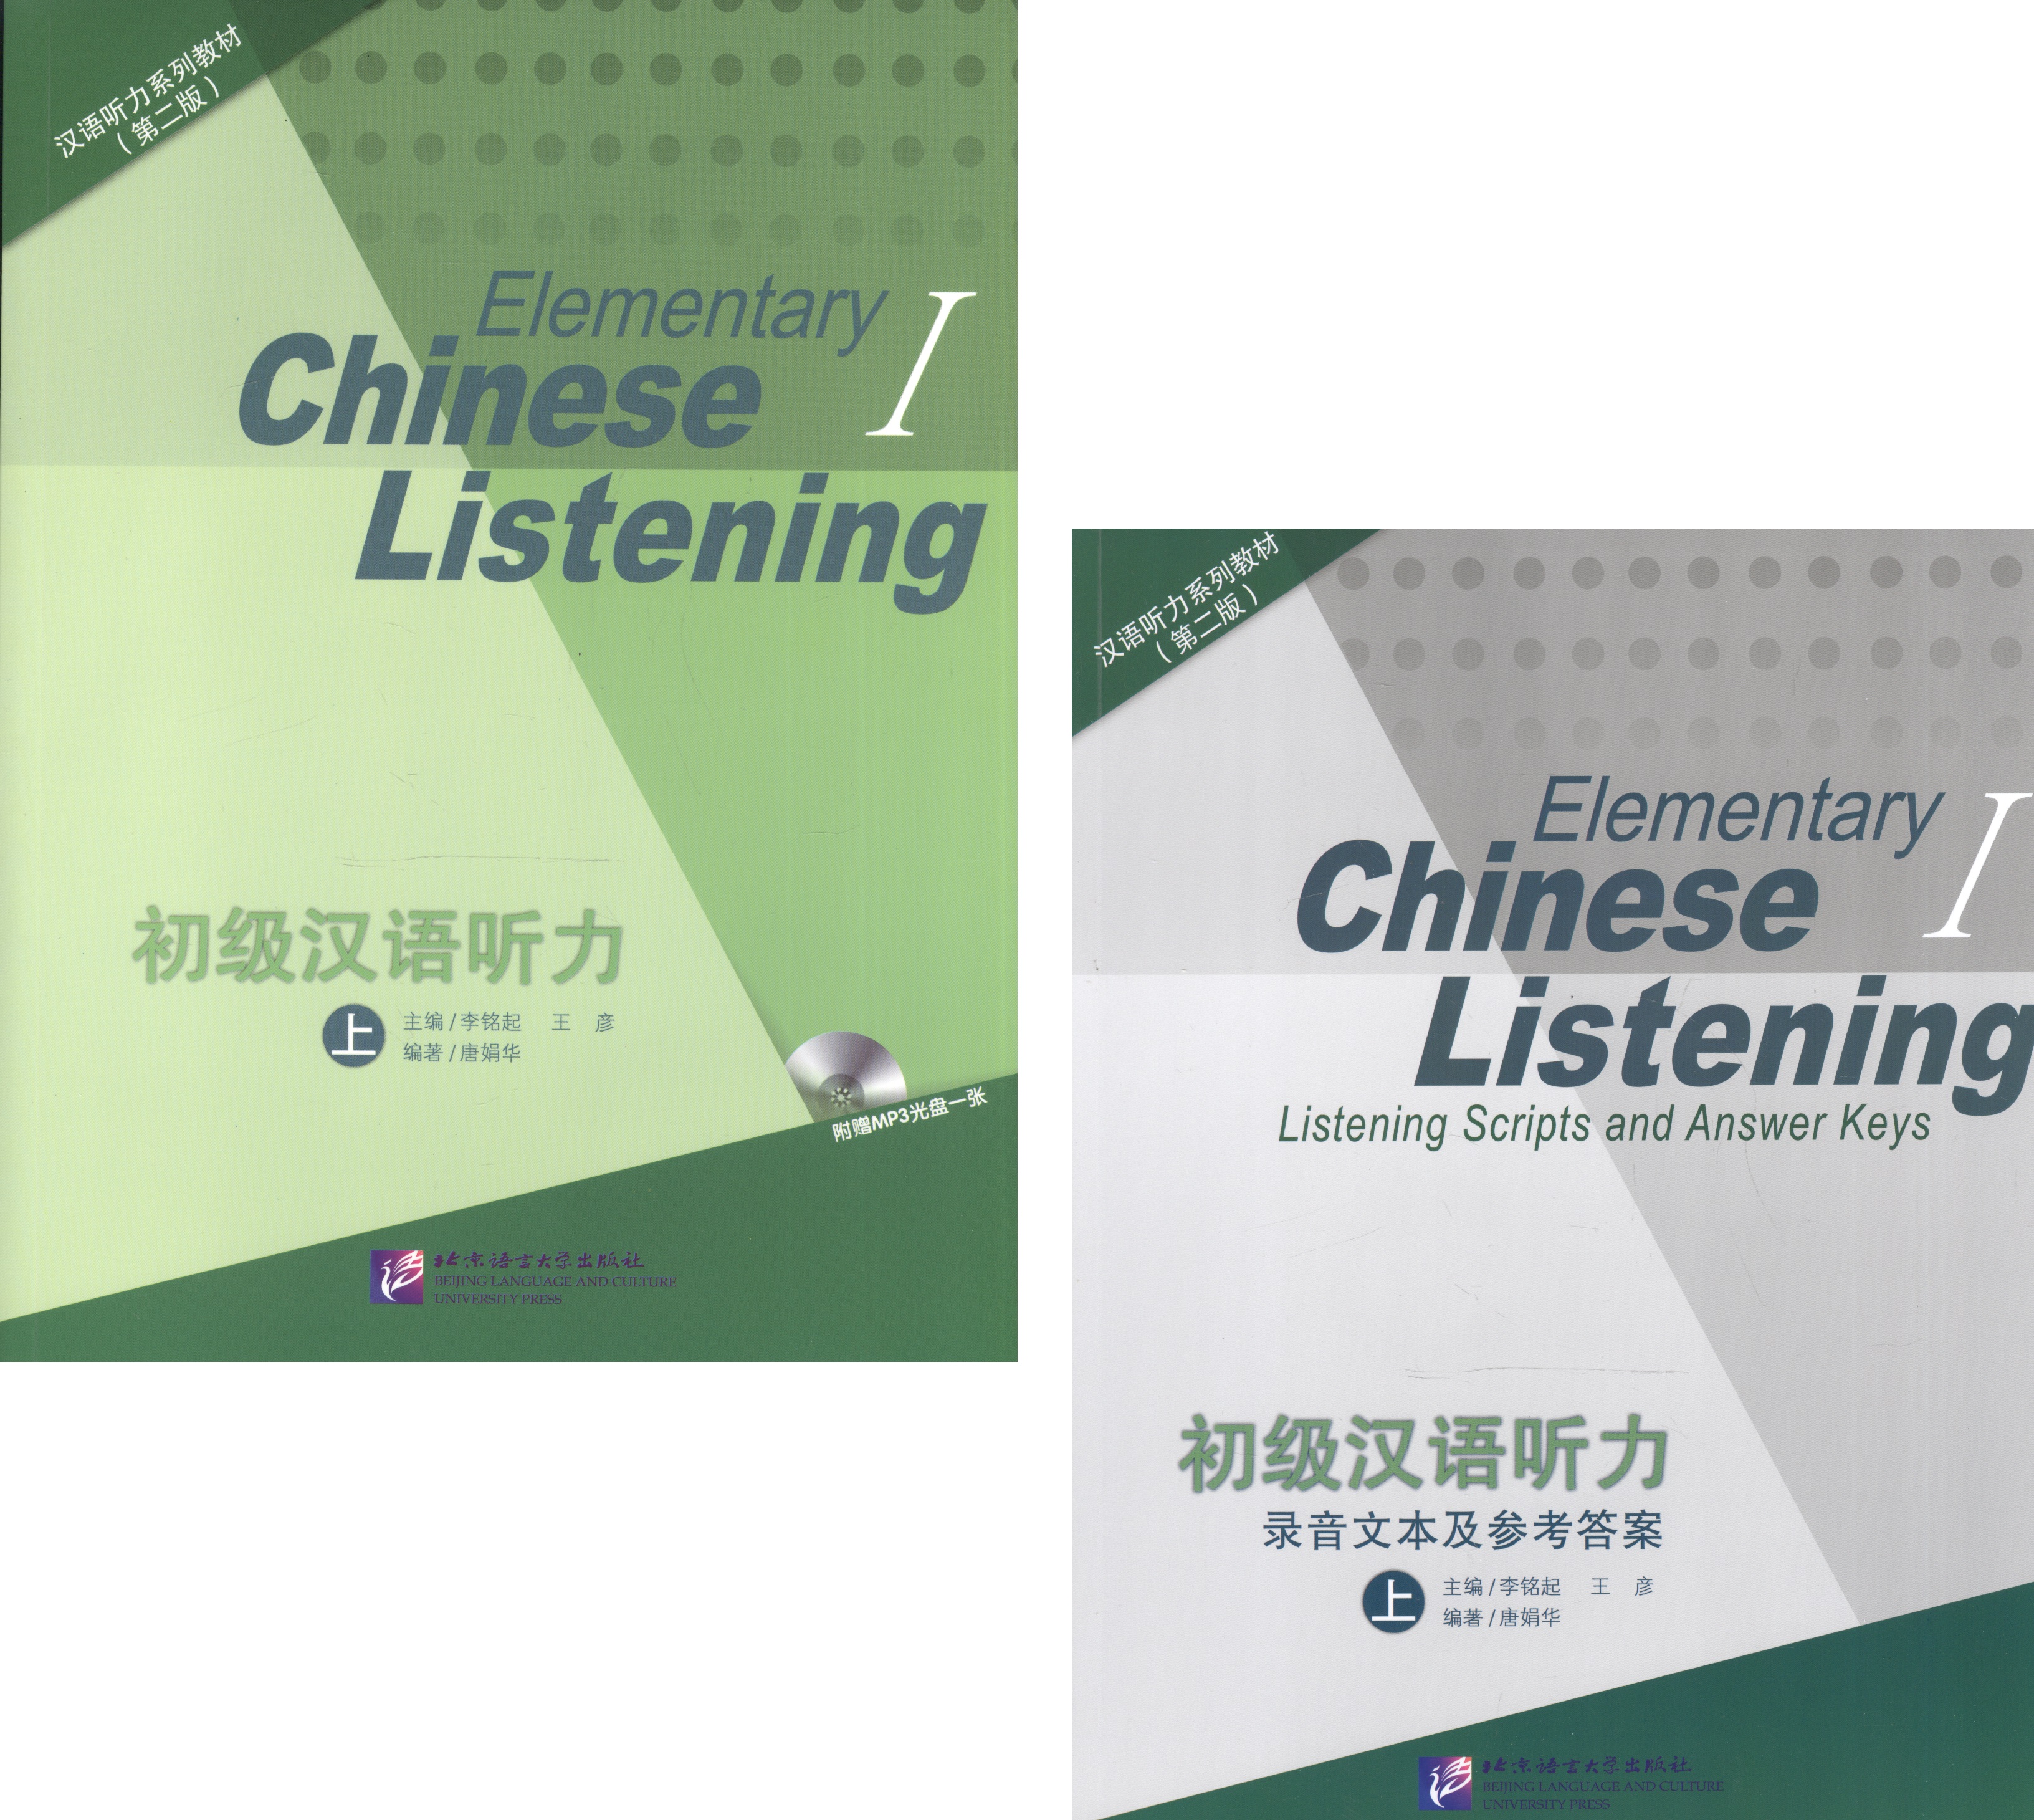 Elementary Chinese Listening I + MP3 CD